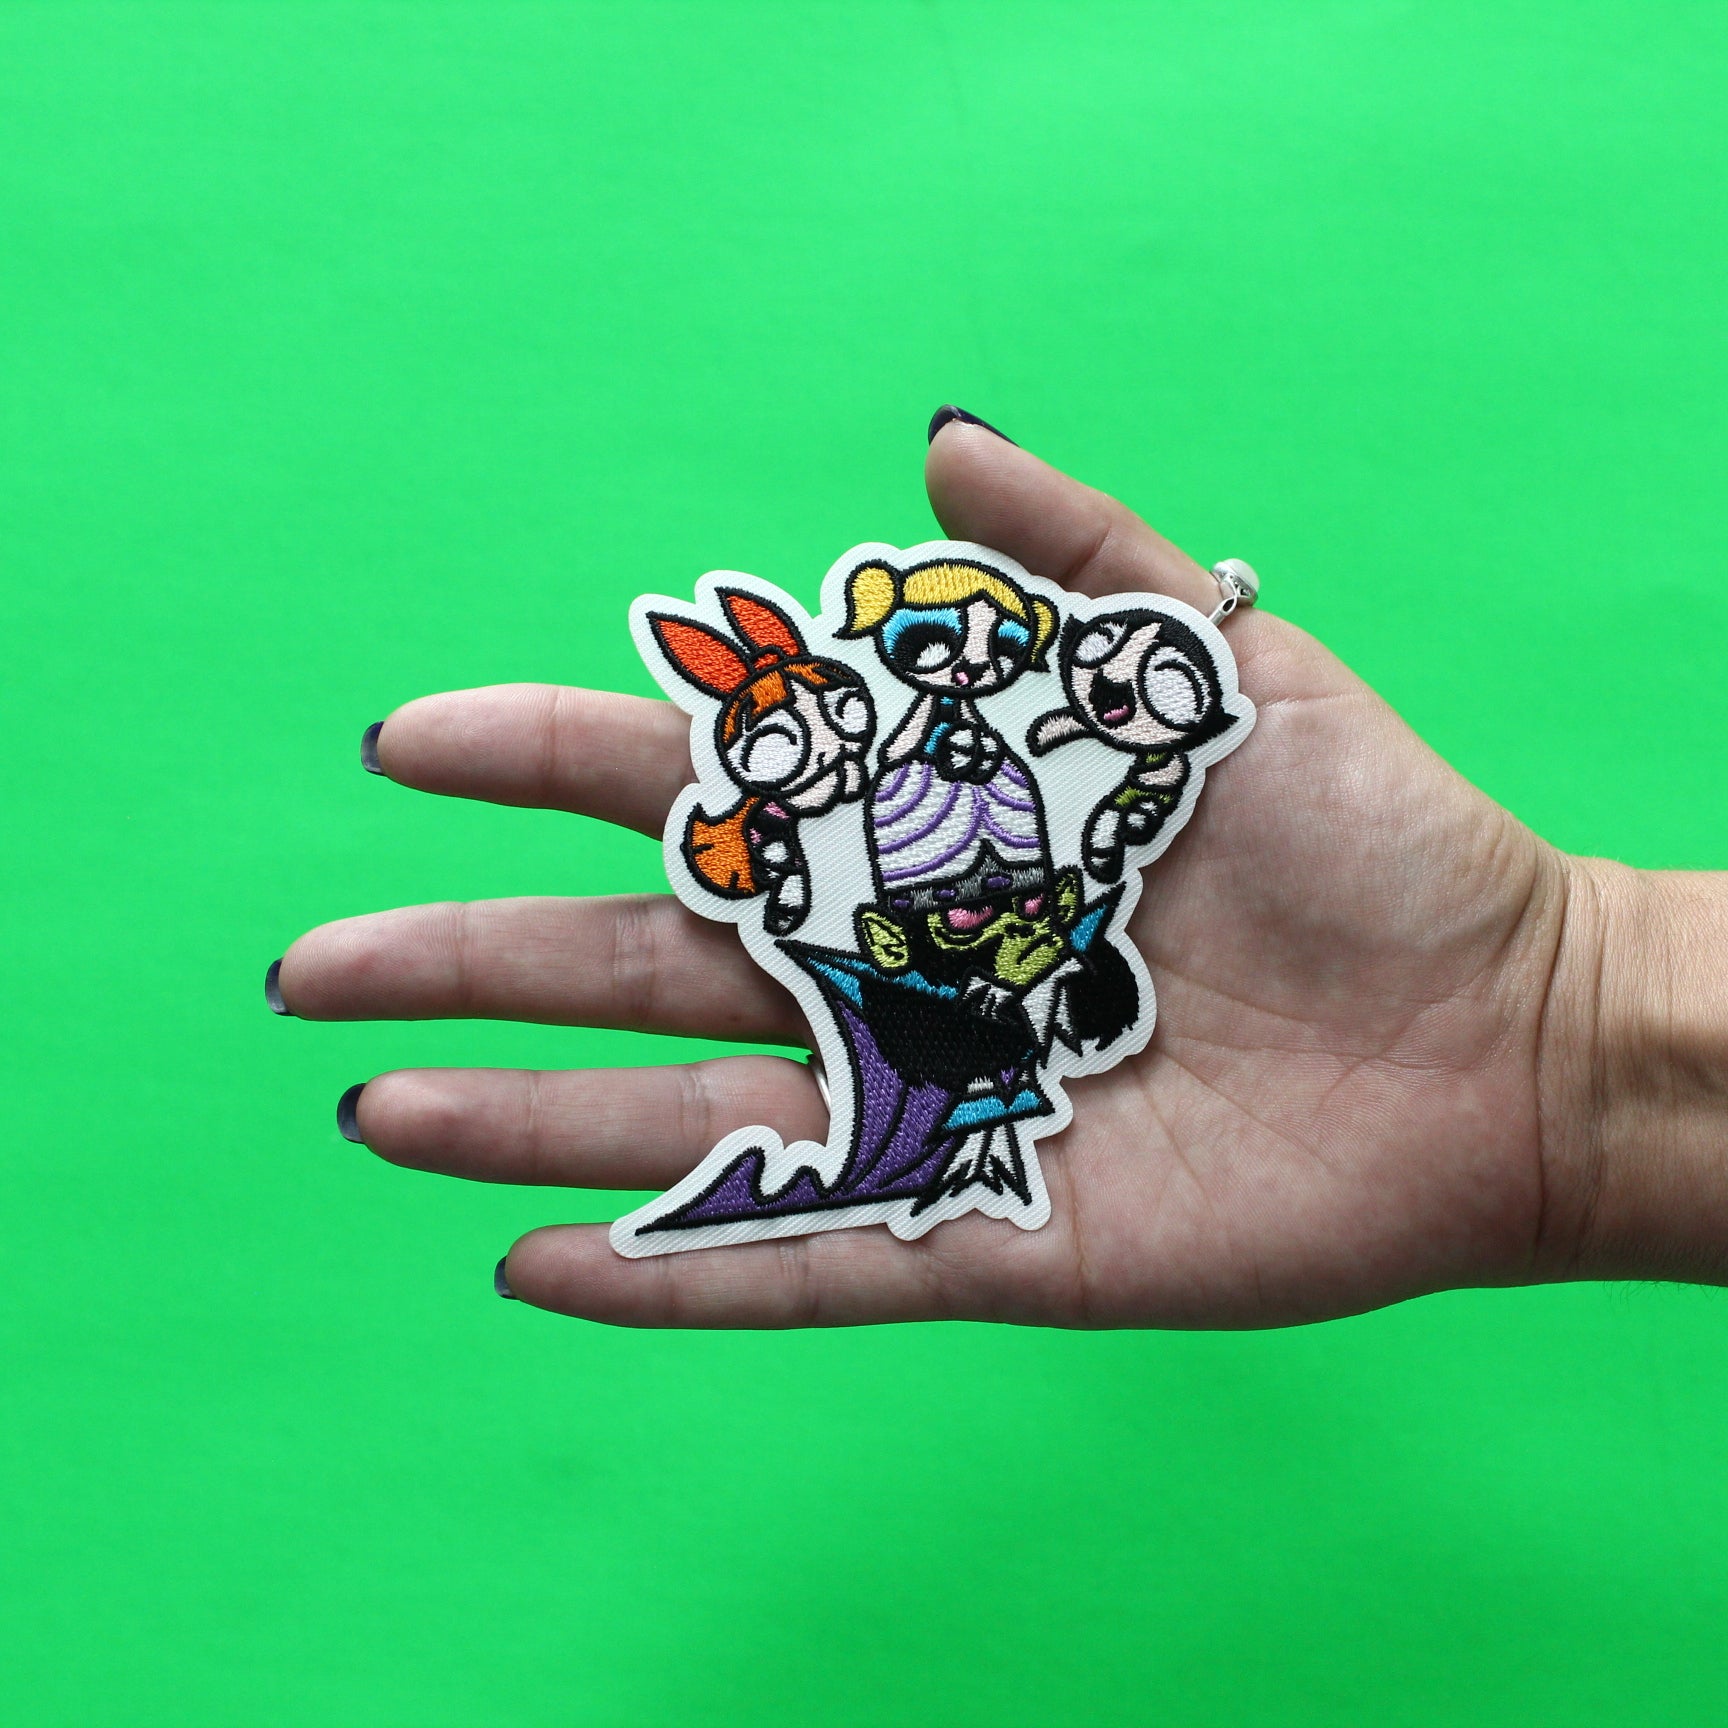 Powerpuff Girls Teasing Mojo Jojo Patch Cartoon Network Animation Embroidered Iron On